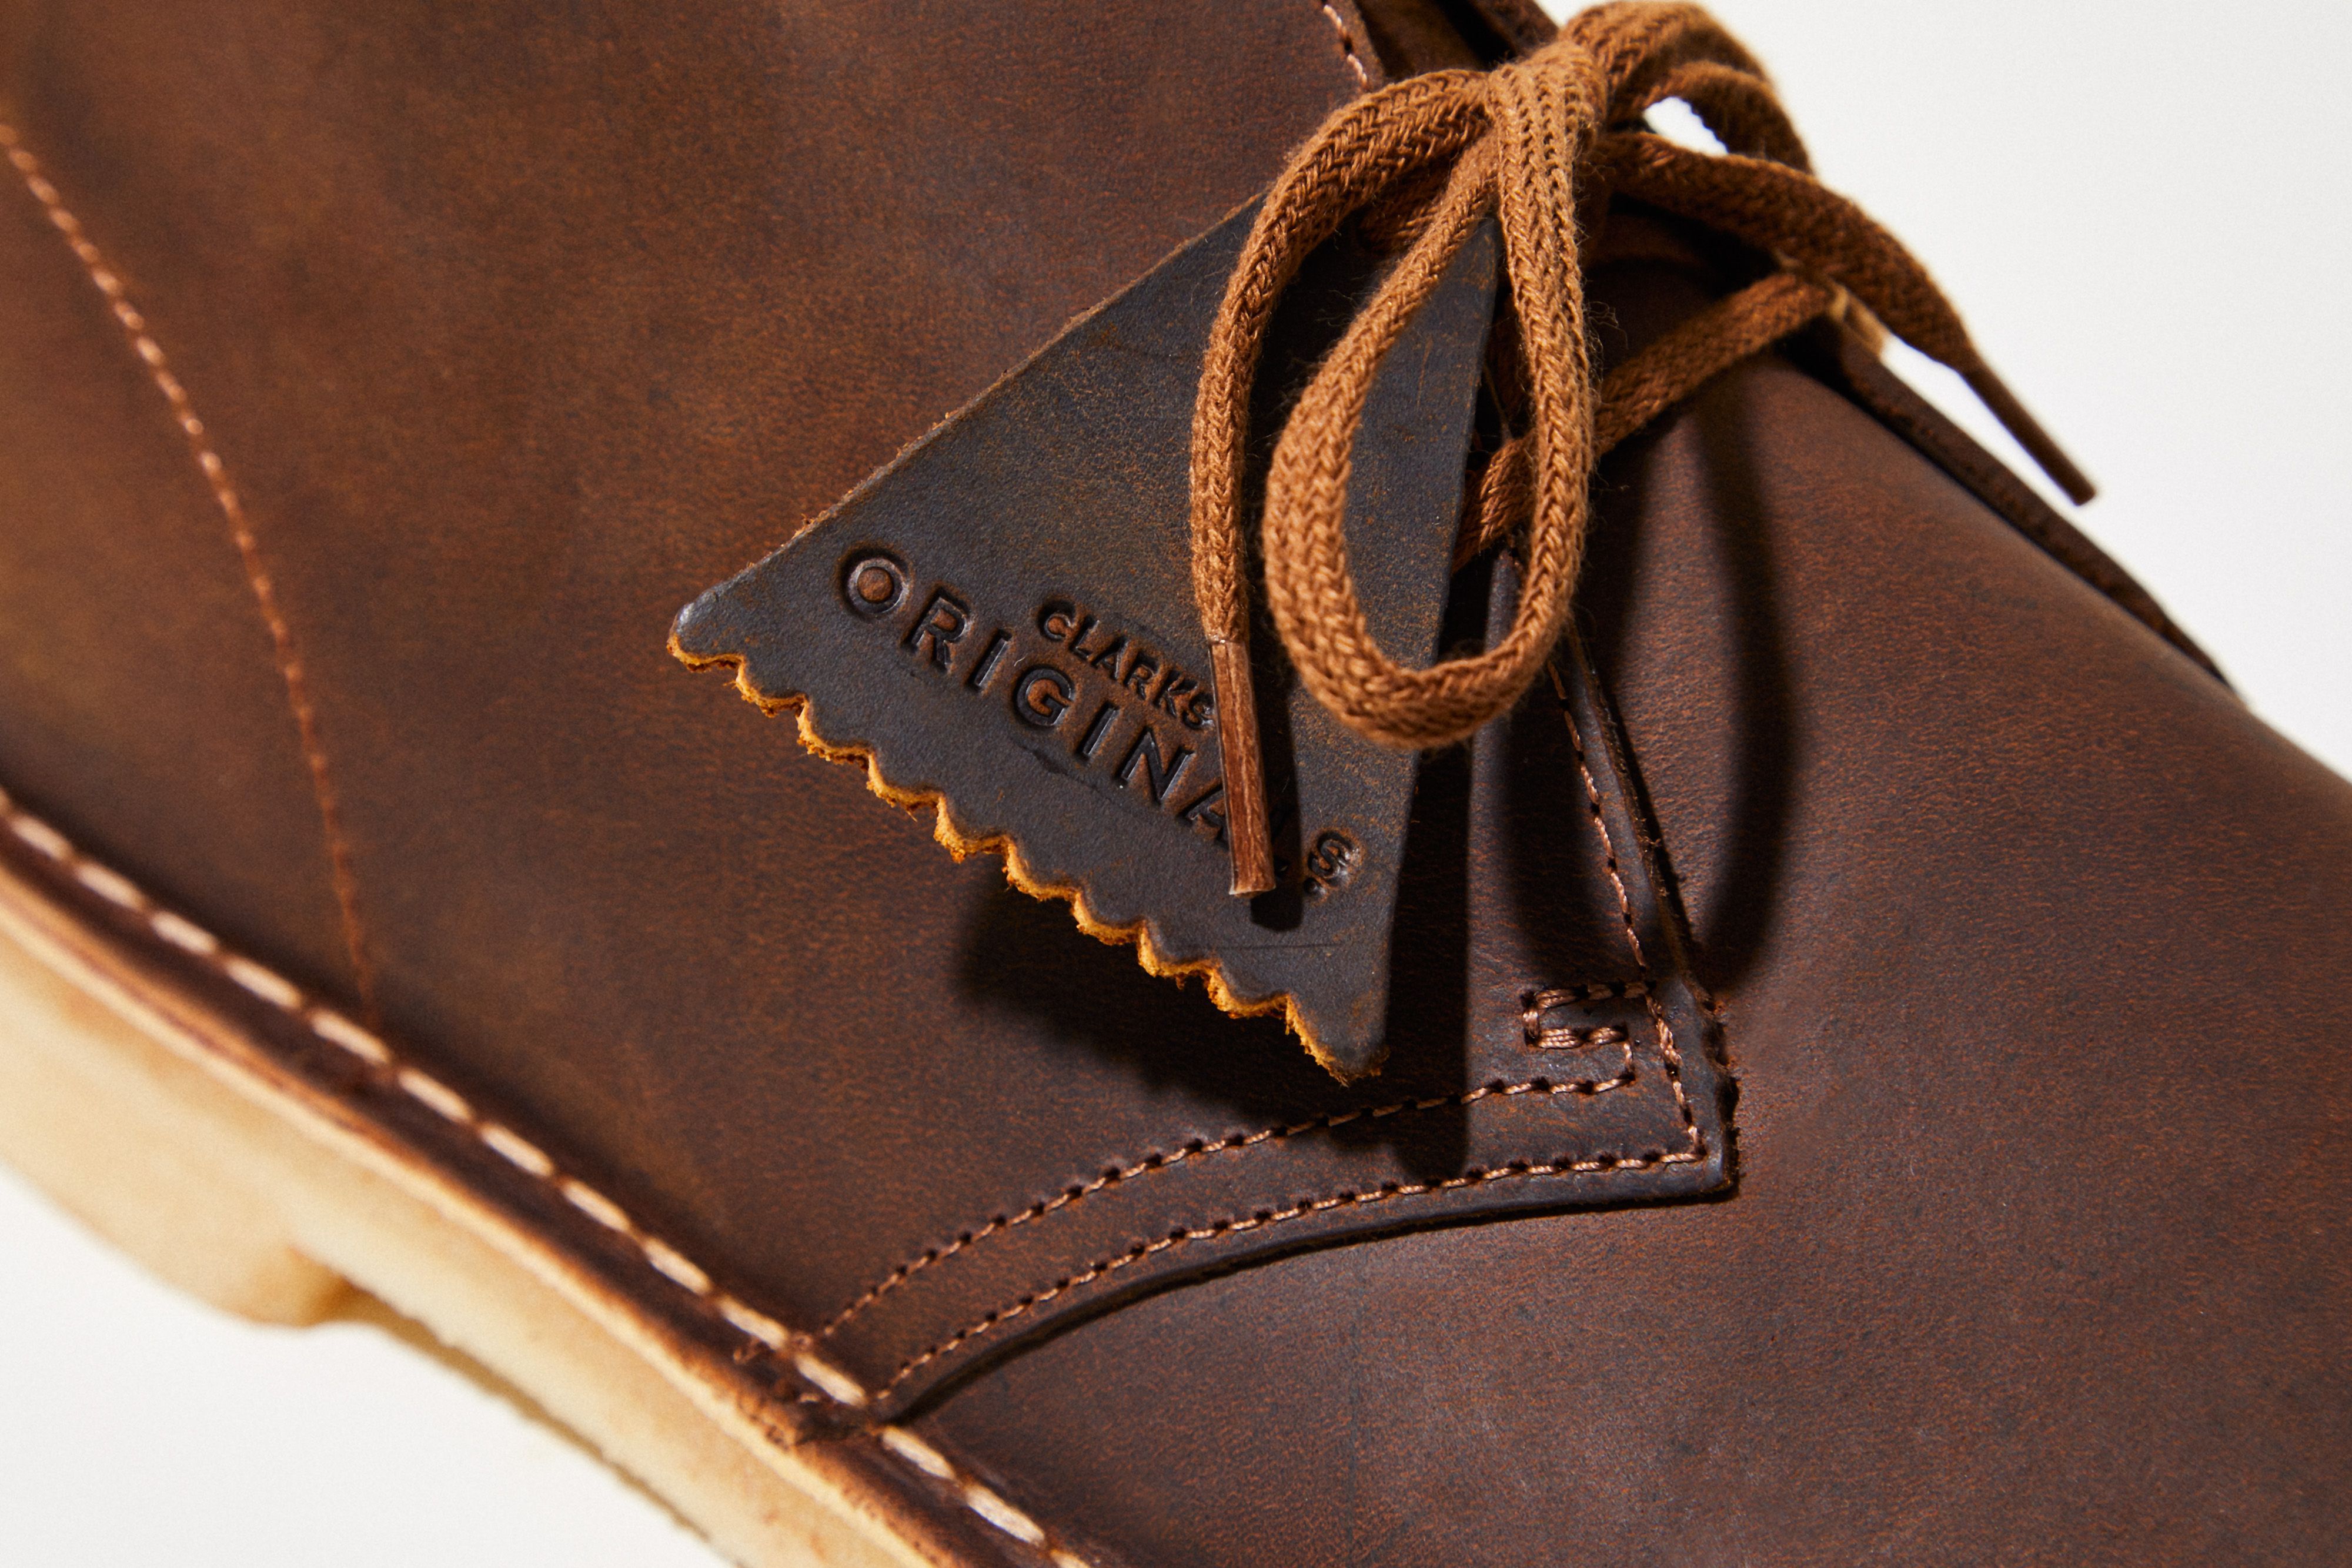 Clarks Desert Boots Endorsement, and History